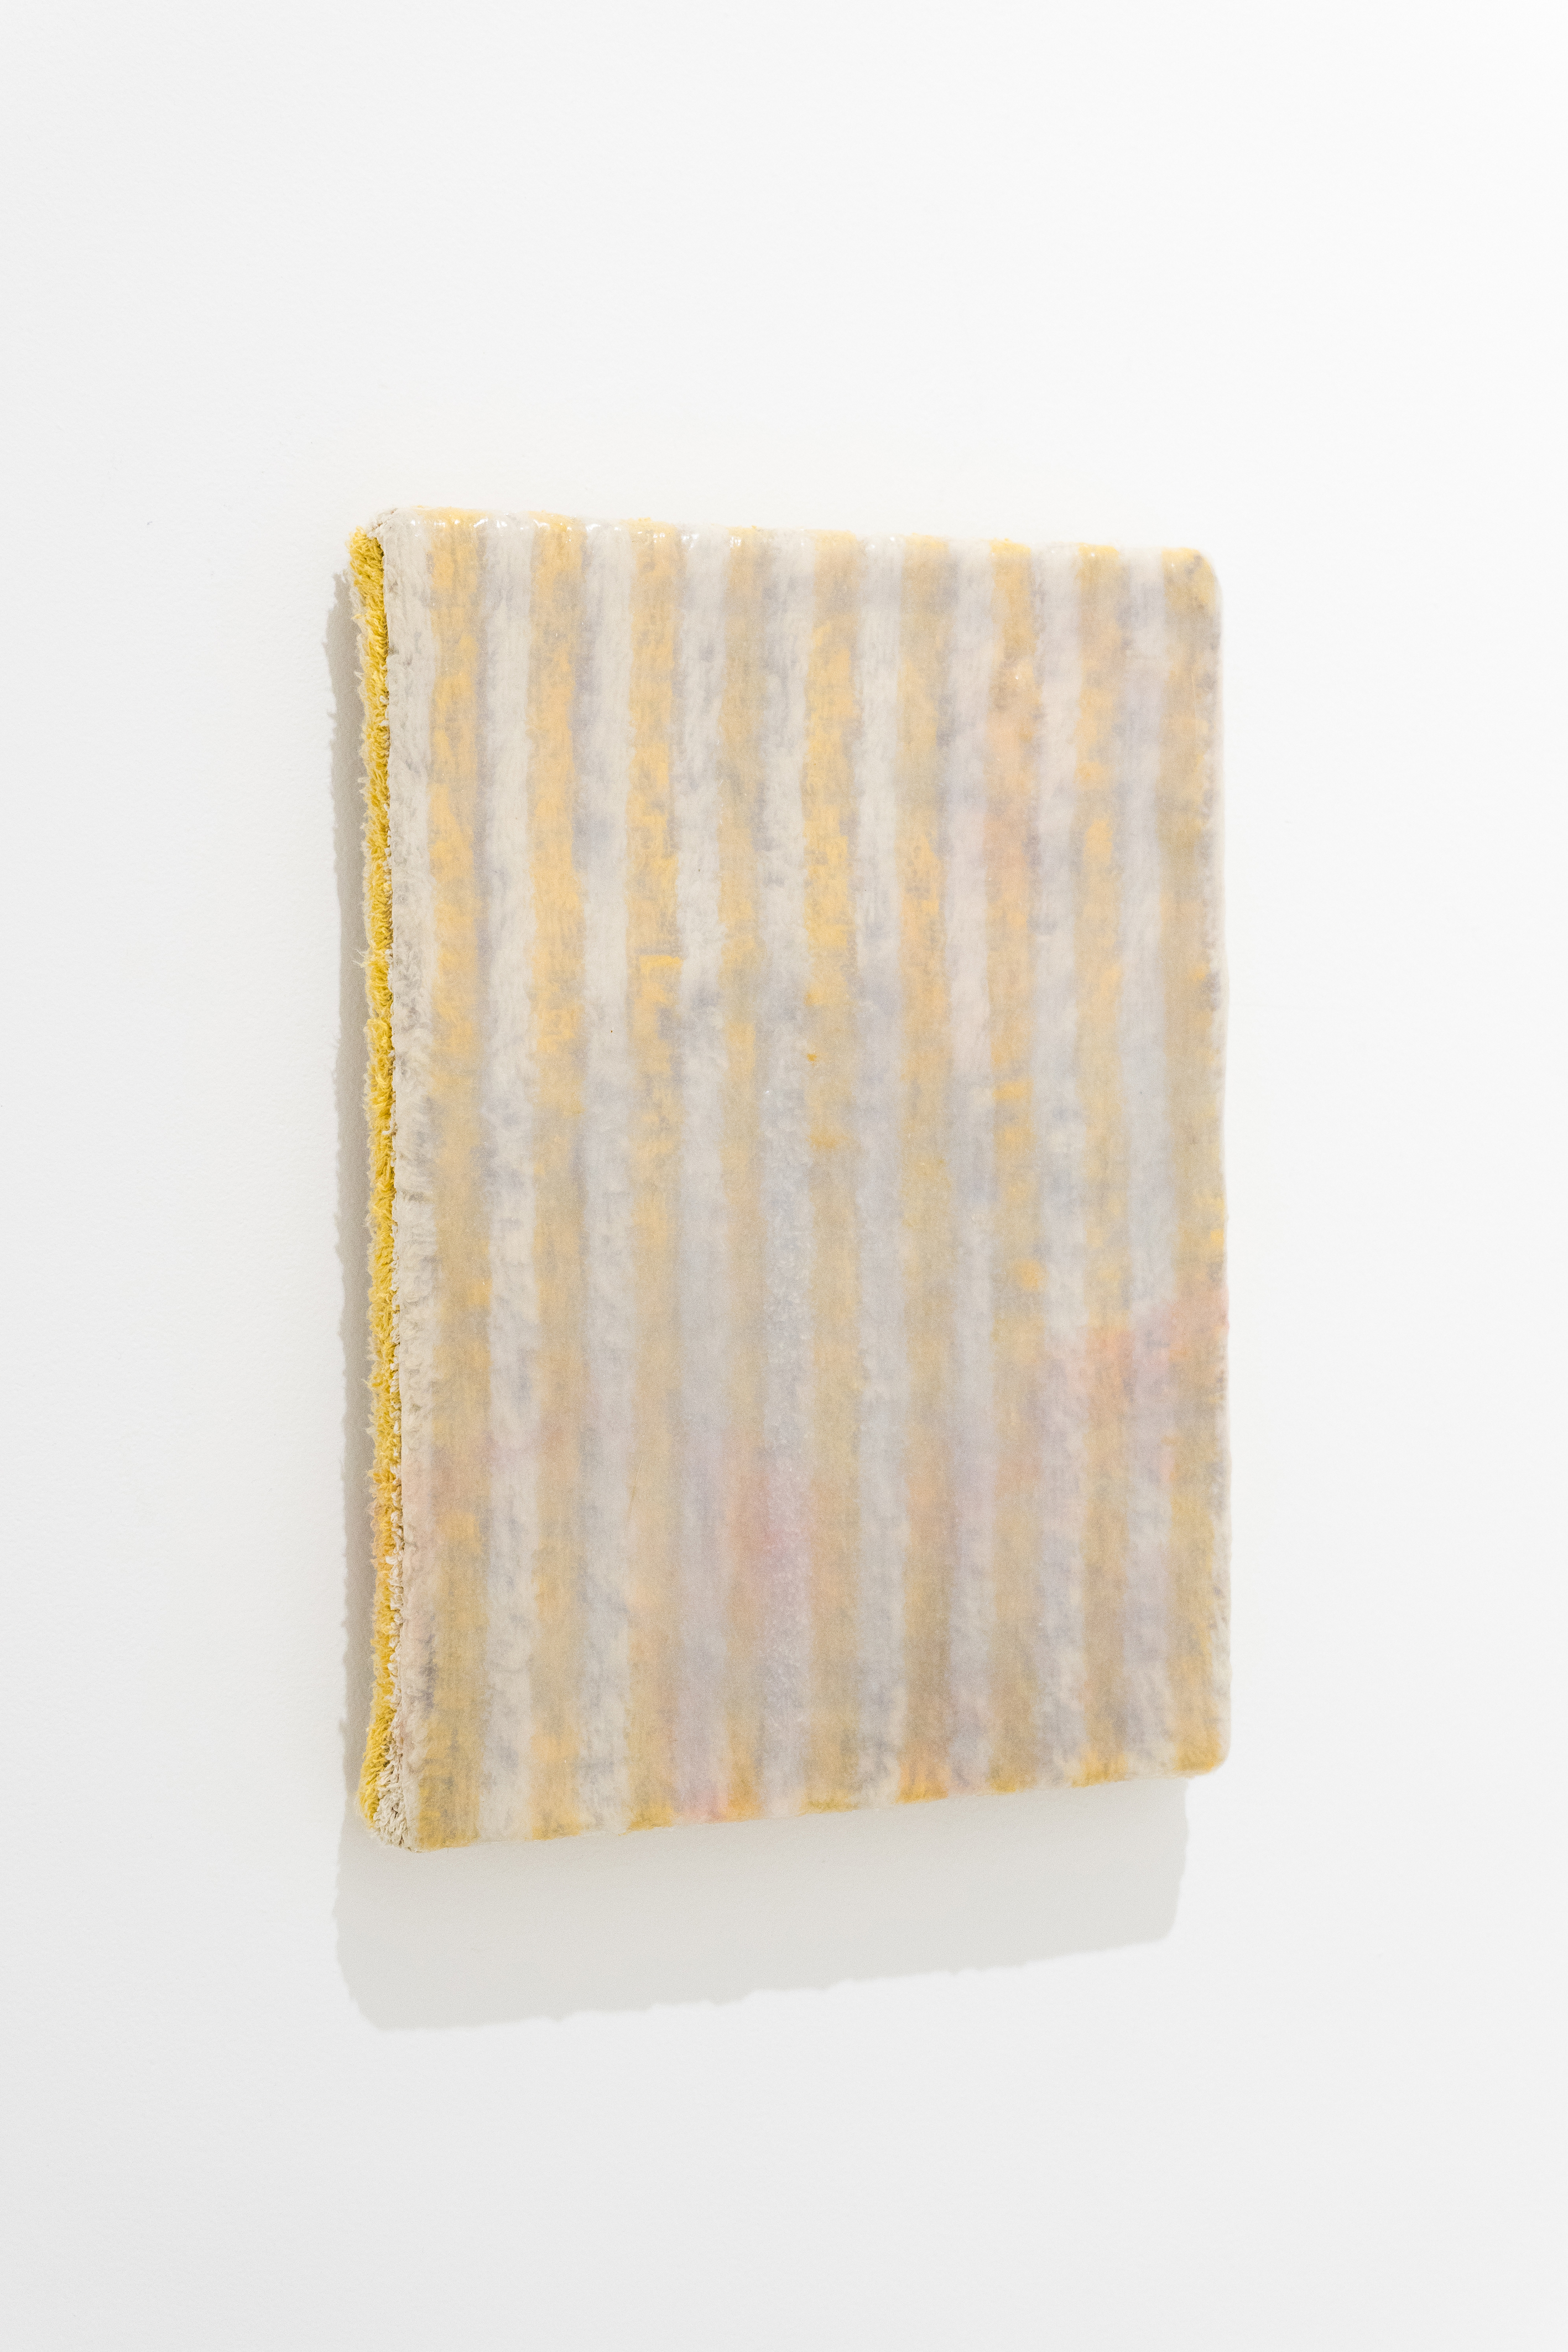 Joel Kirkham, Throwing in the Towel(Again), 2018, towel, glue and varnish.